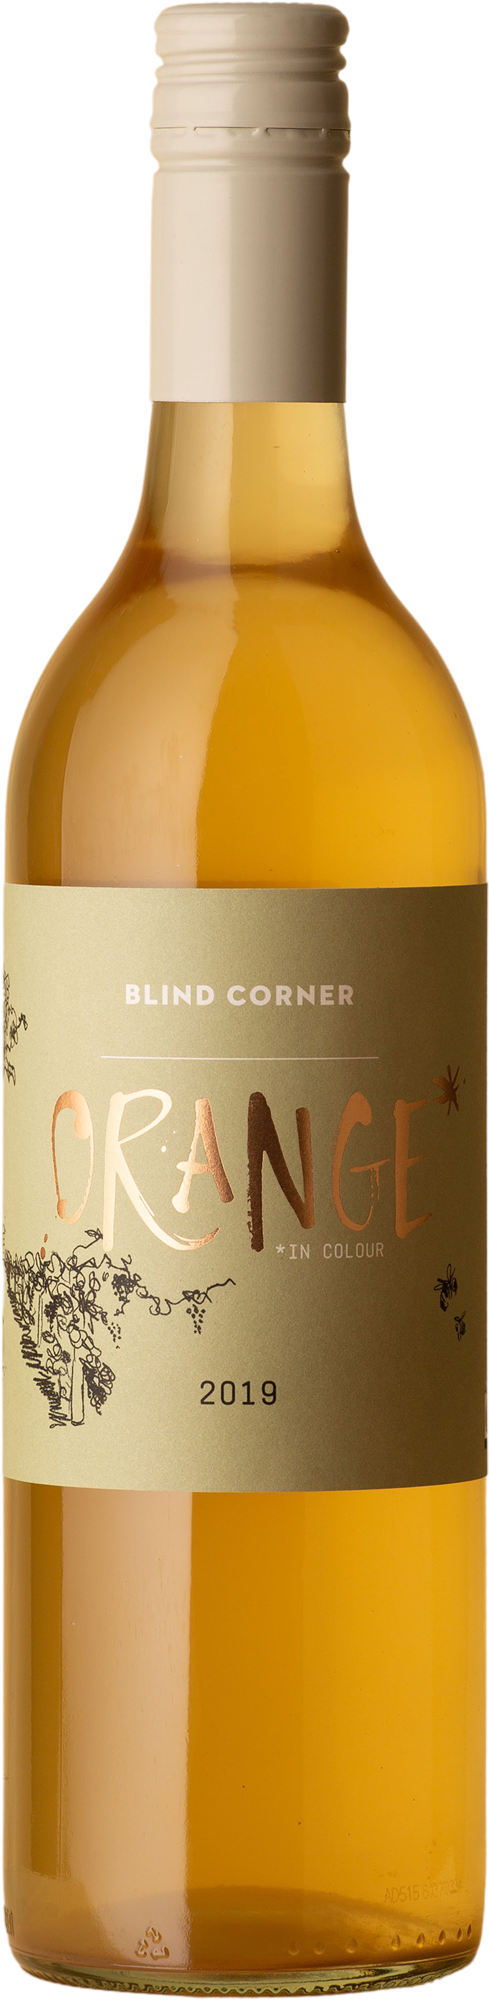 Blind Corner - Orange In Colour 2019 Orange Wine